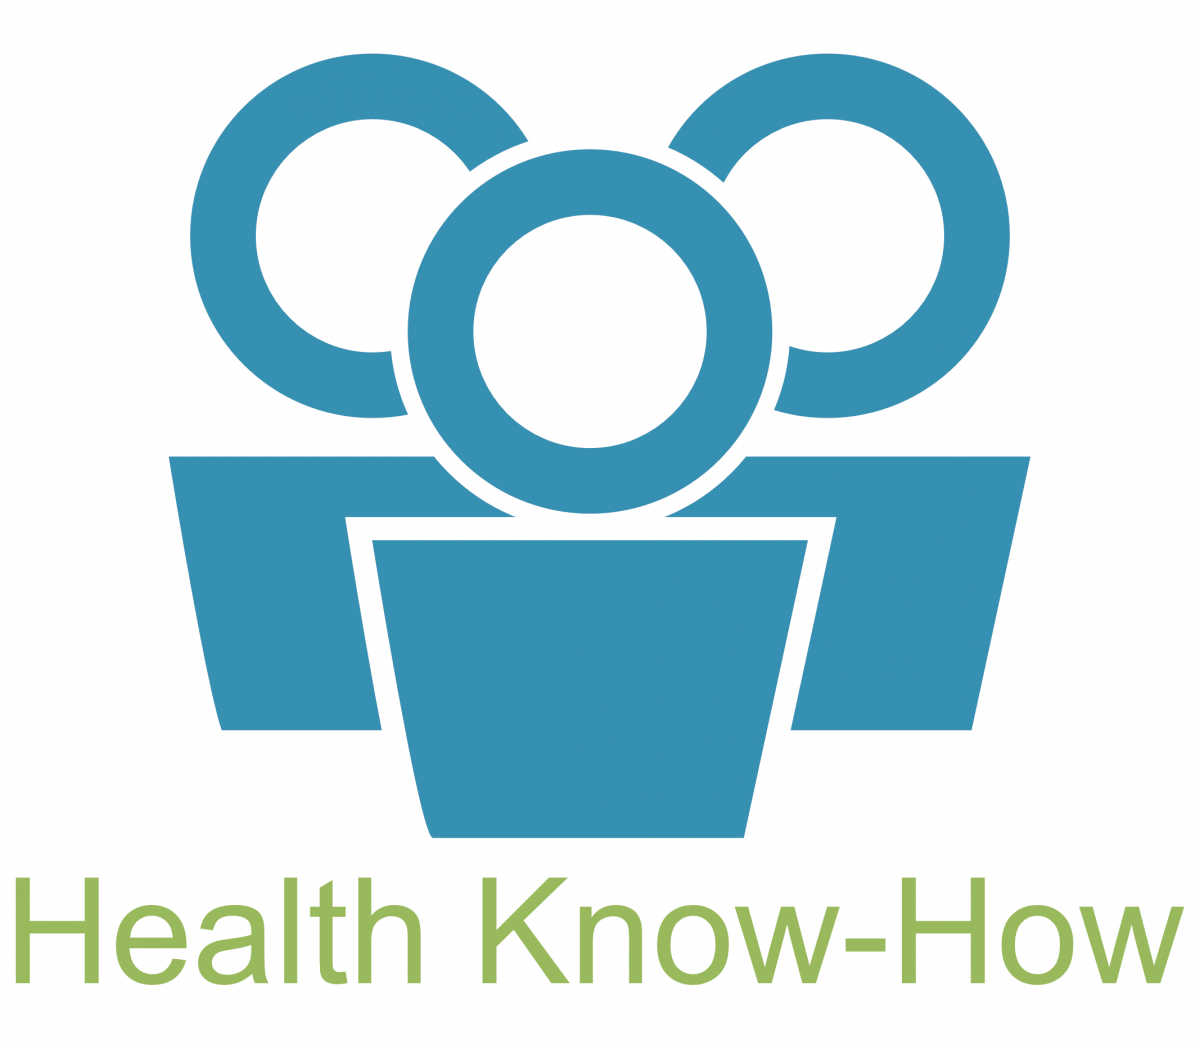 Health Know-How program logo